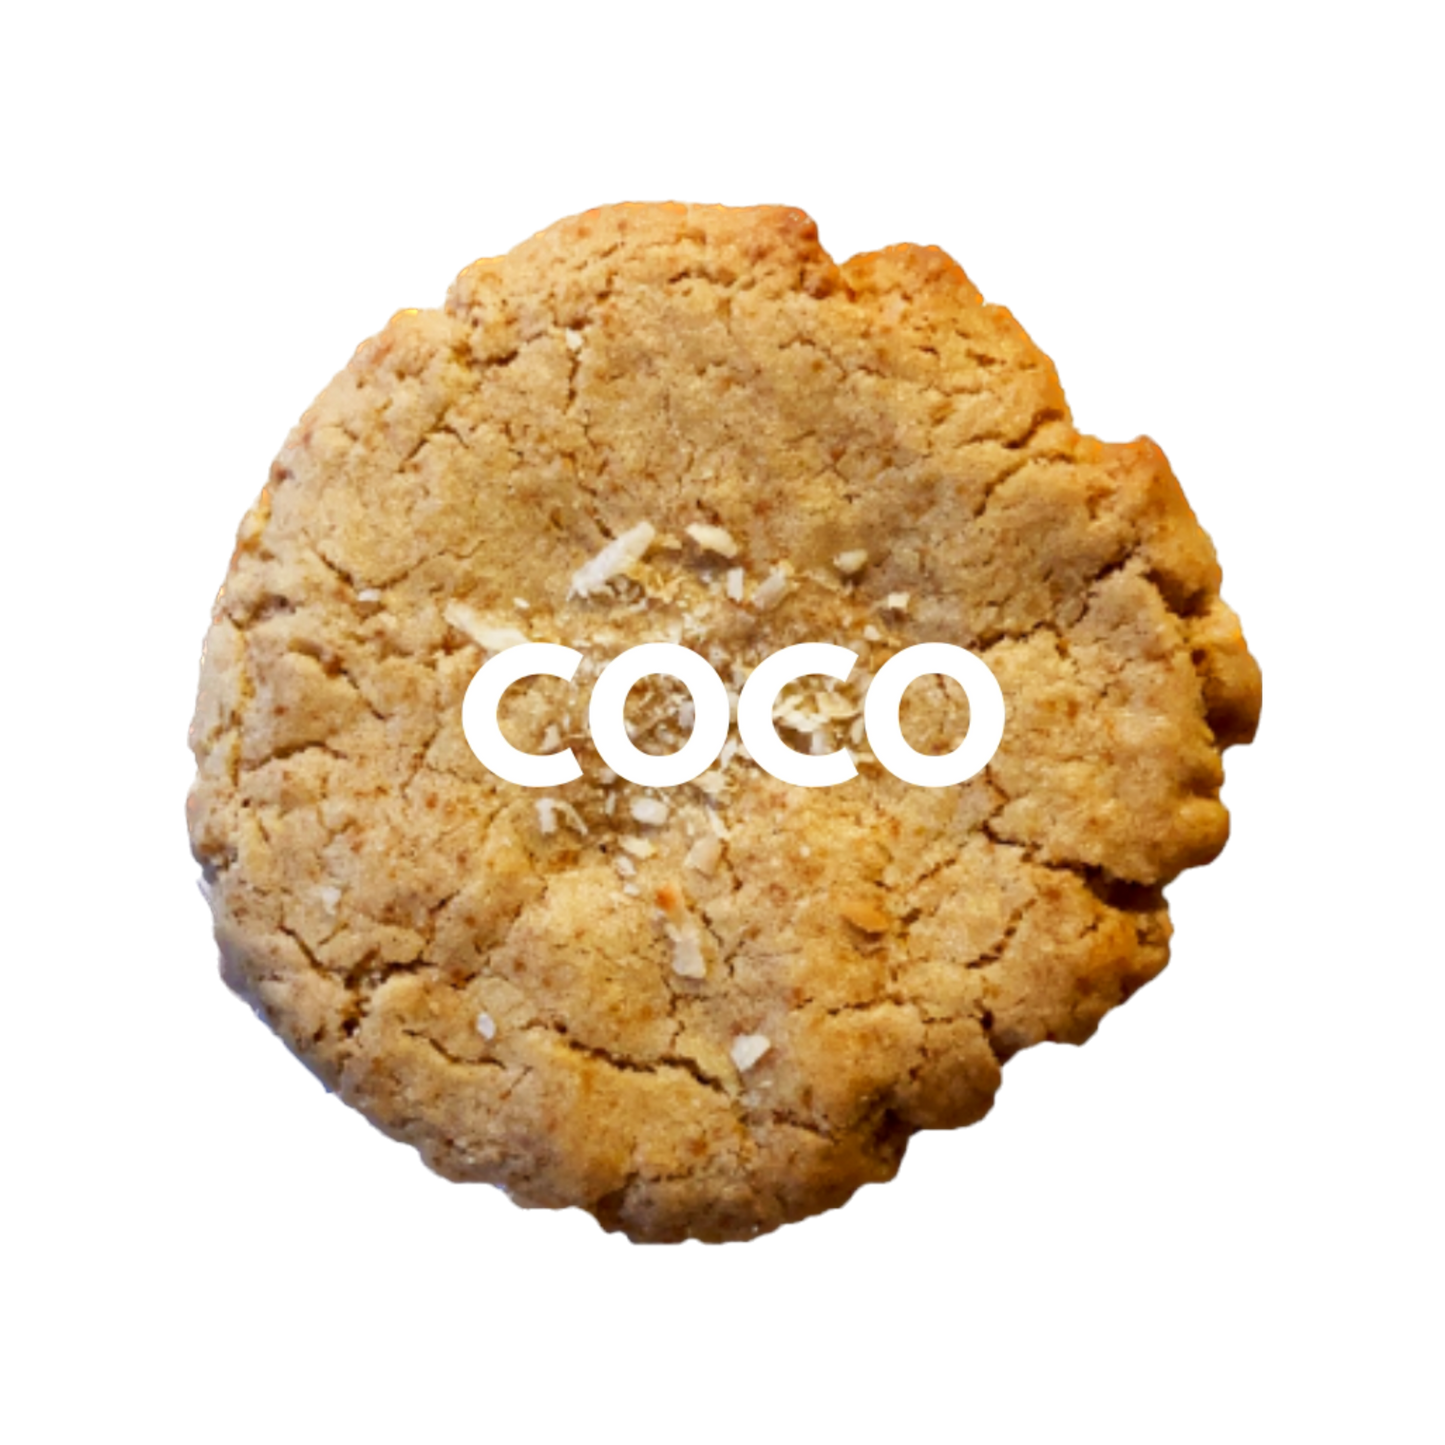 Coco (coconut) (vegan cookie)